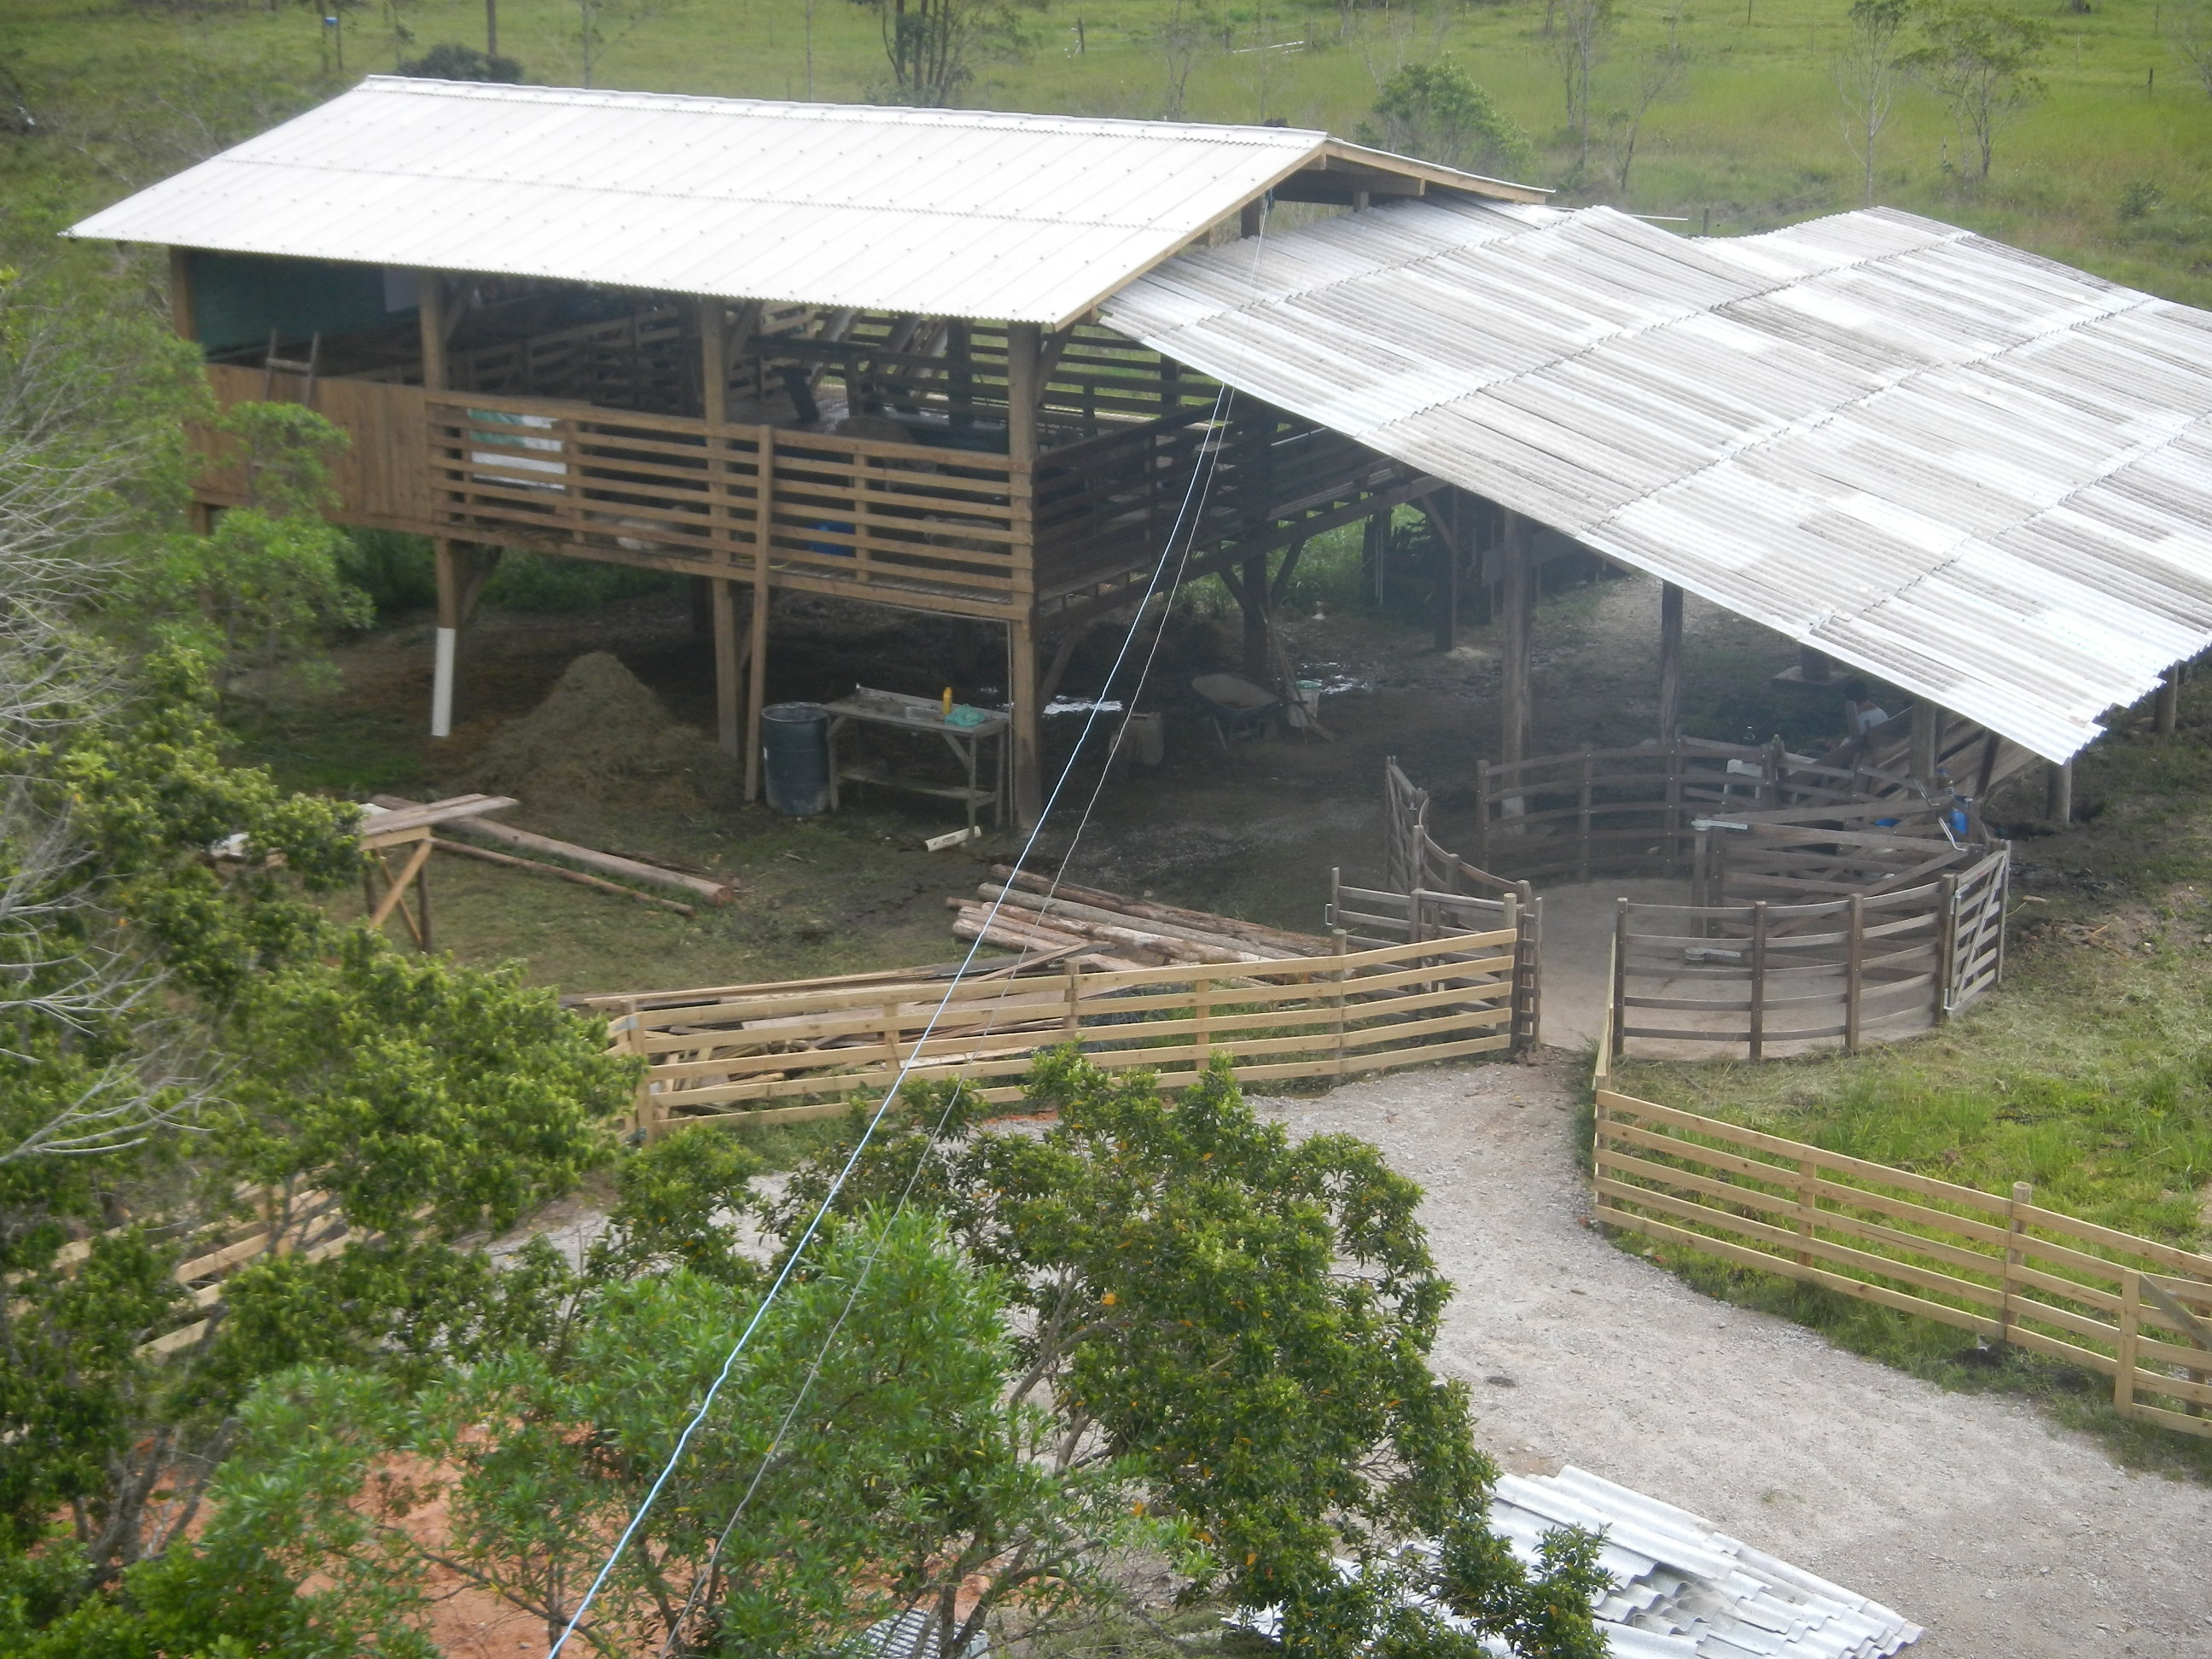 20151211 Fazenda Ovinocultura estrutura manejo vista panorâmica 002.jpg